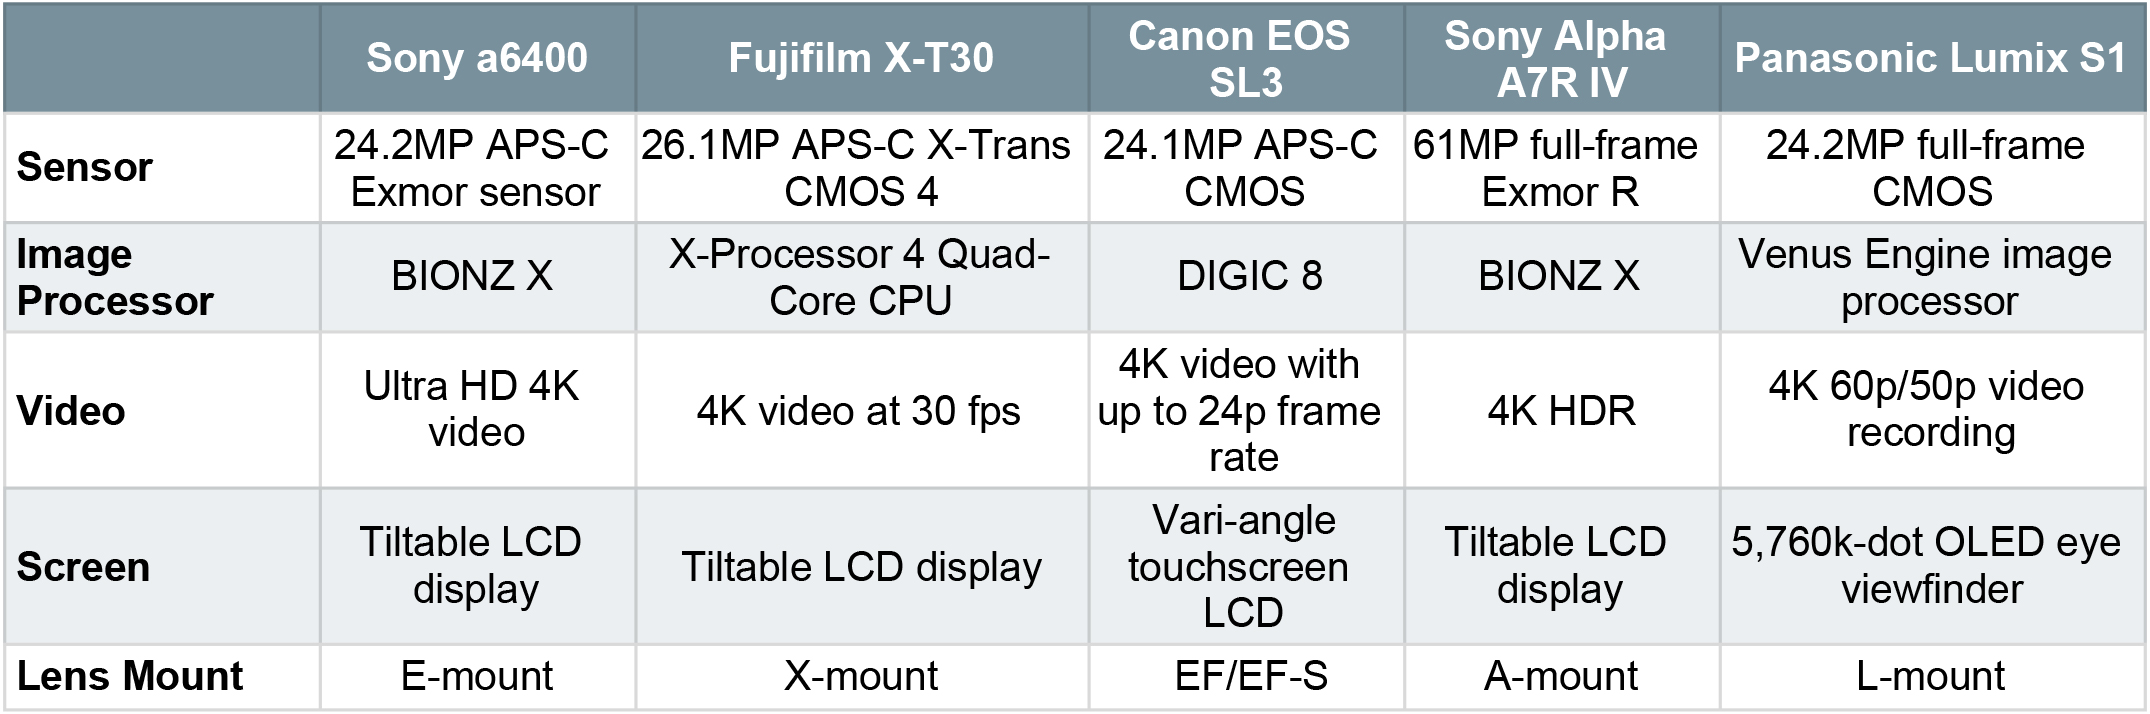 Interchangeable Lens Cameras Spreadsheet